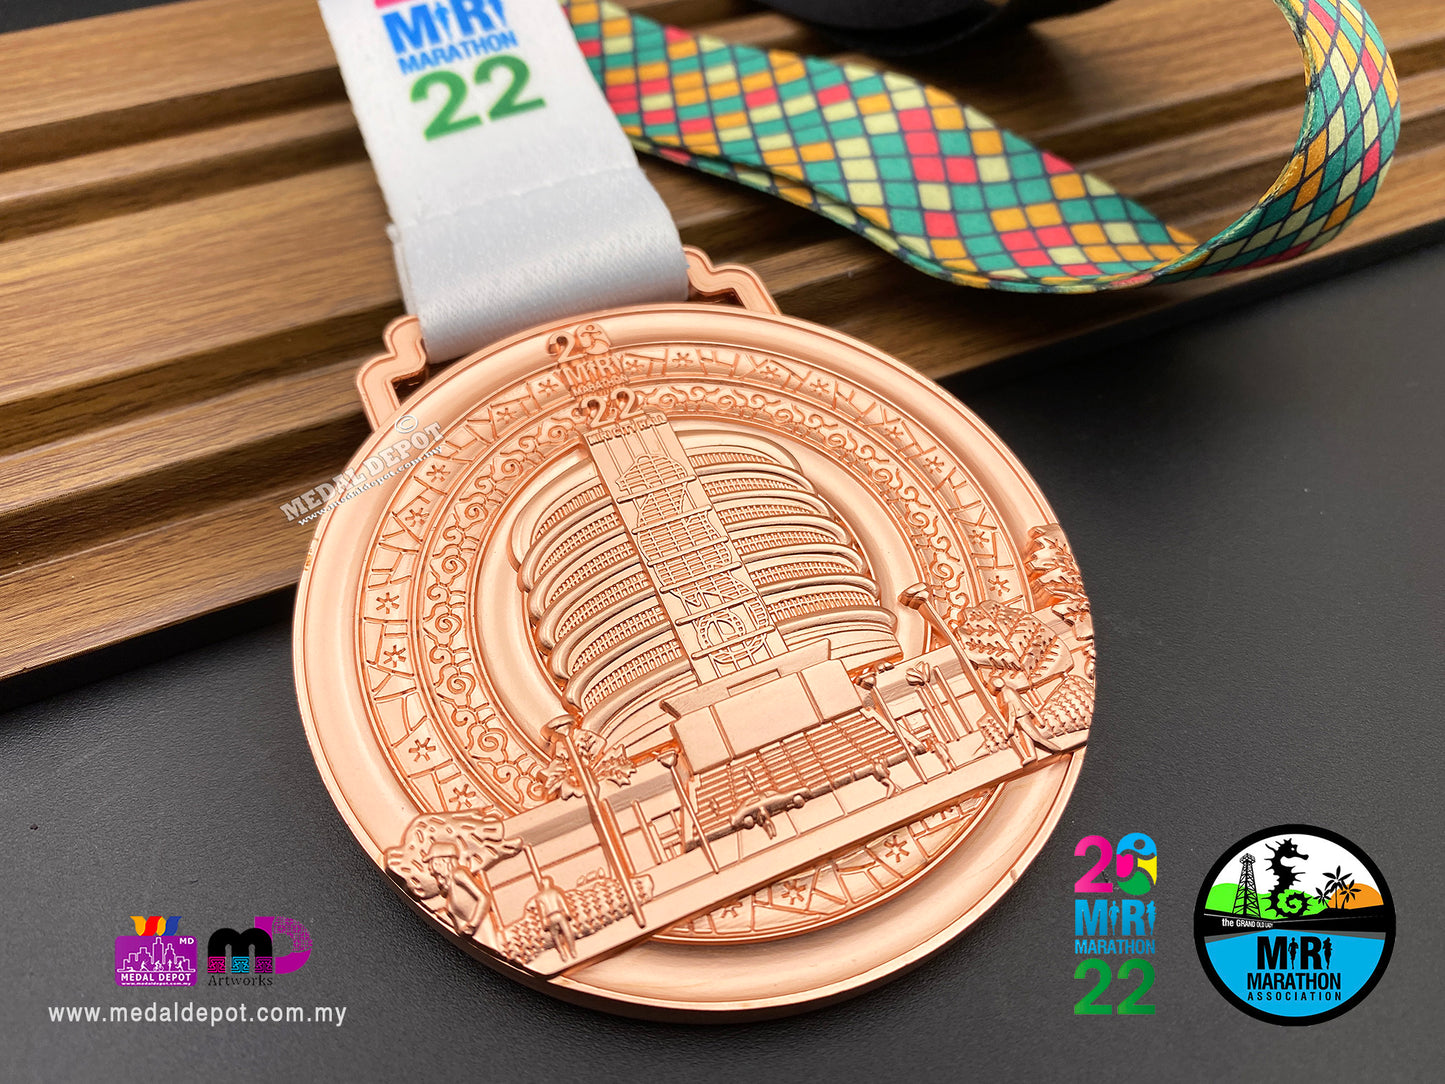 Miri Marathon 2022 medal by Medal Depot